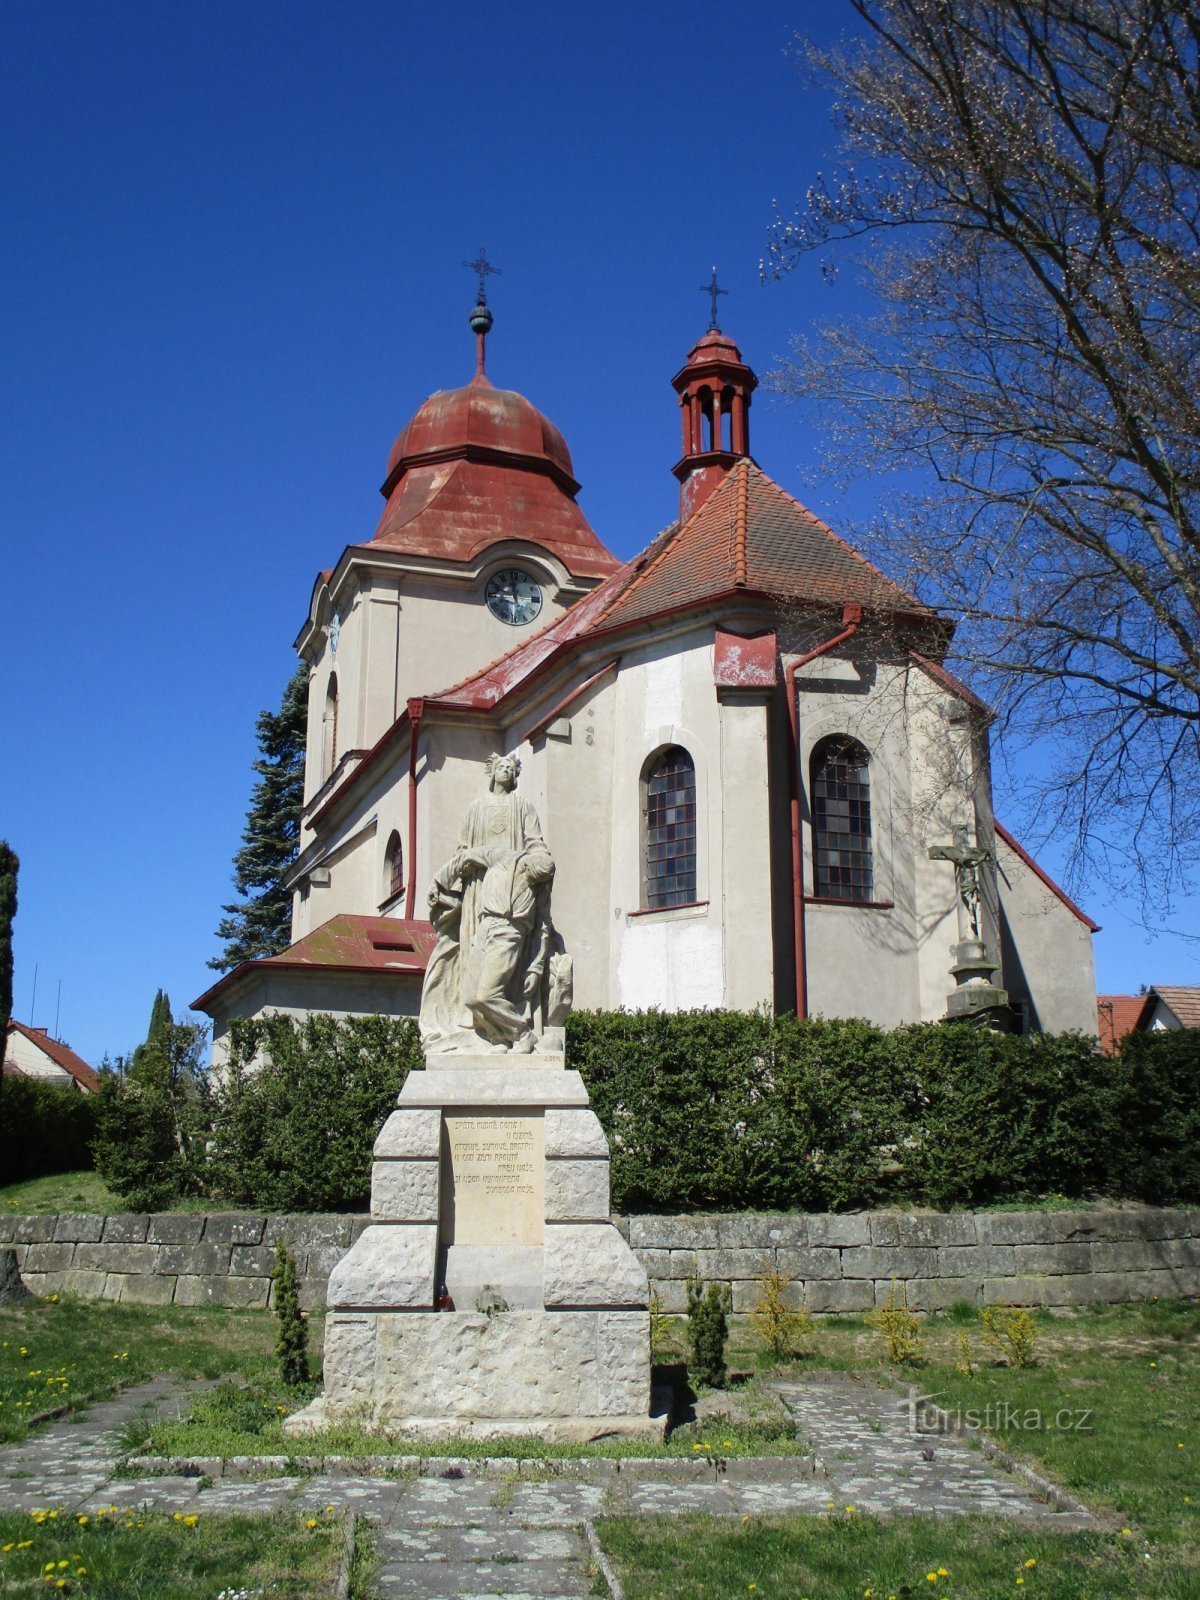 Church of All Saints (Velký Vřešťov, 20.4.2020/XNUMX/XNUMX)